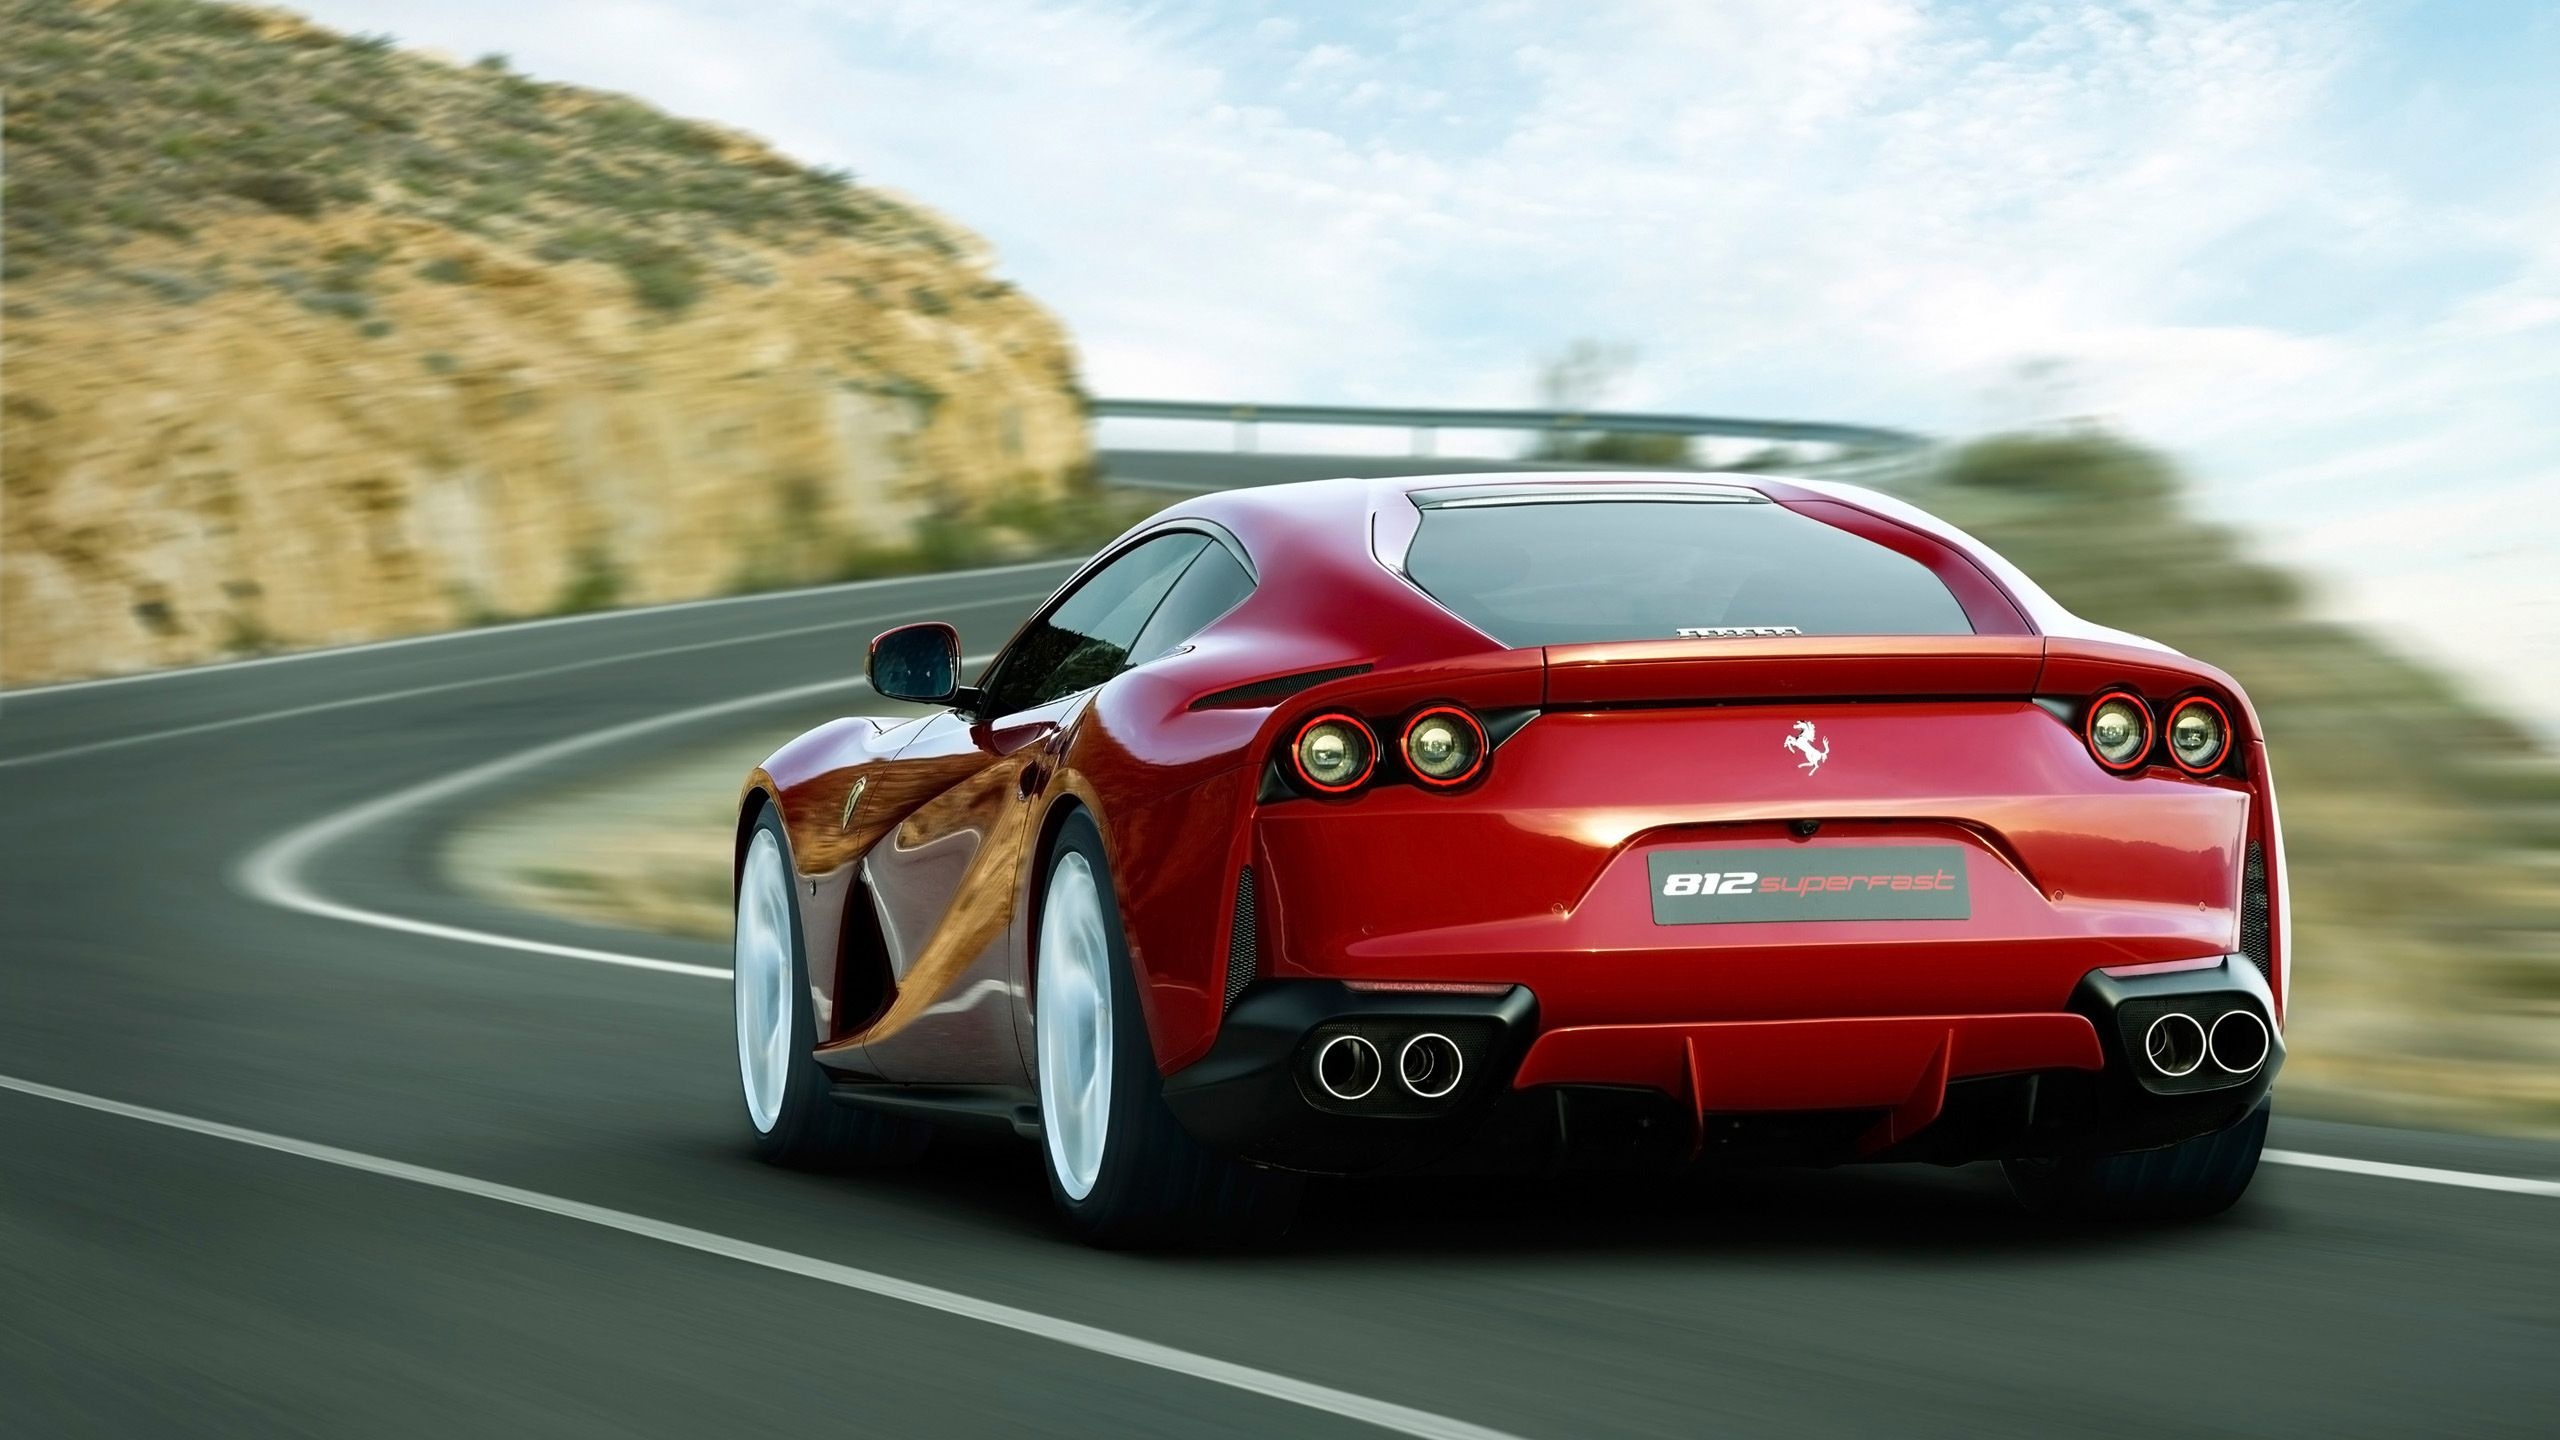 Ferrari gray desktop wallpaper, Dual monitor excellence, Ferrari's HD glory, Car enthusiast's dream, 2560x1440 HD Desktop